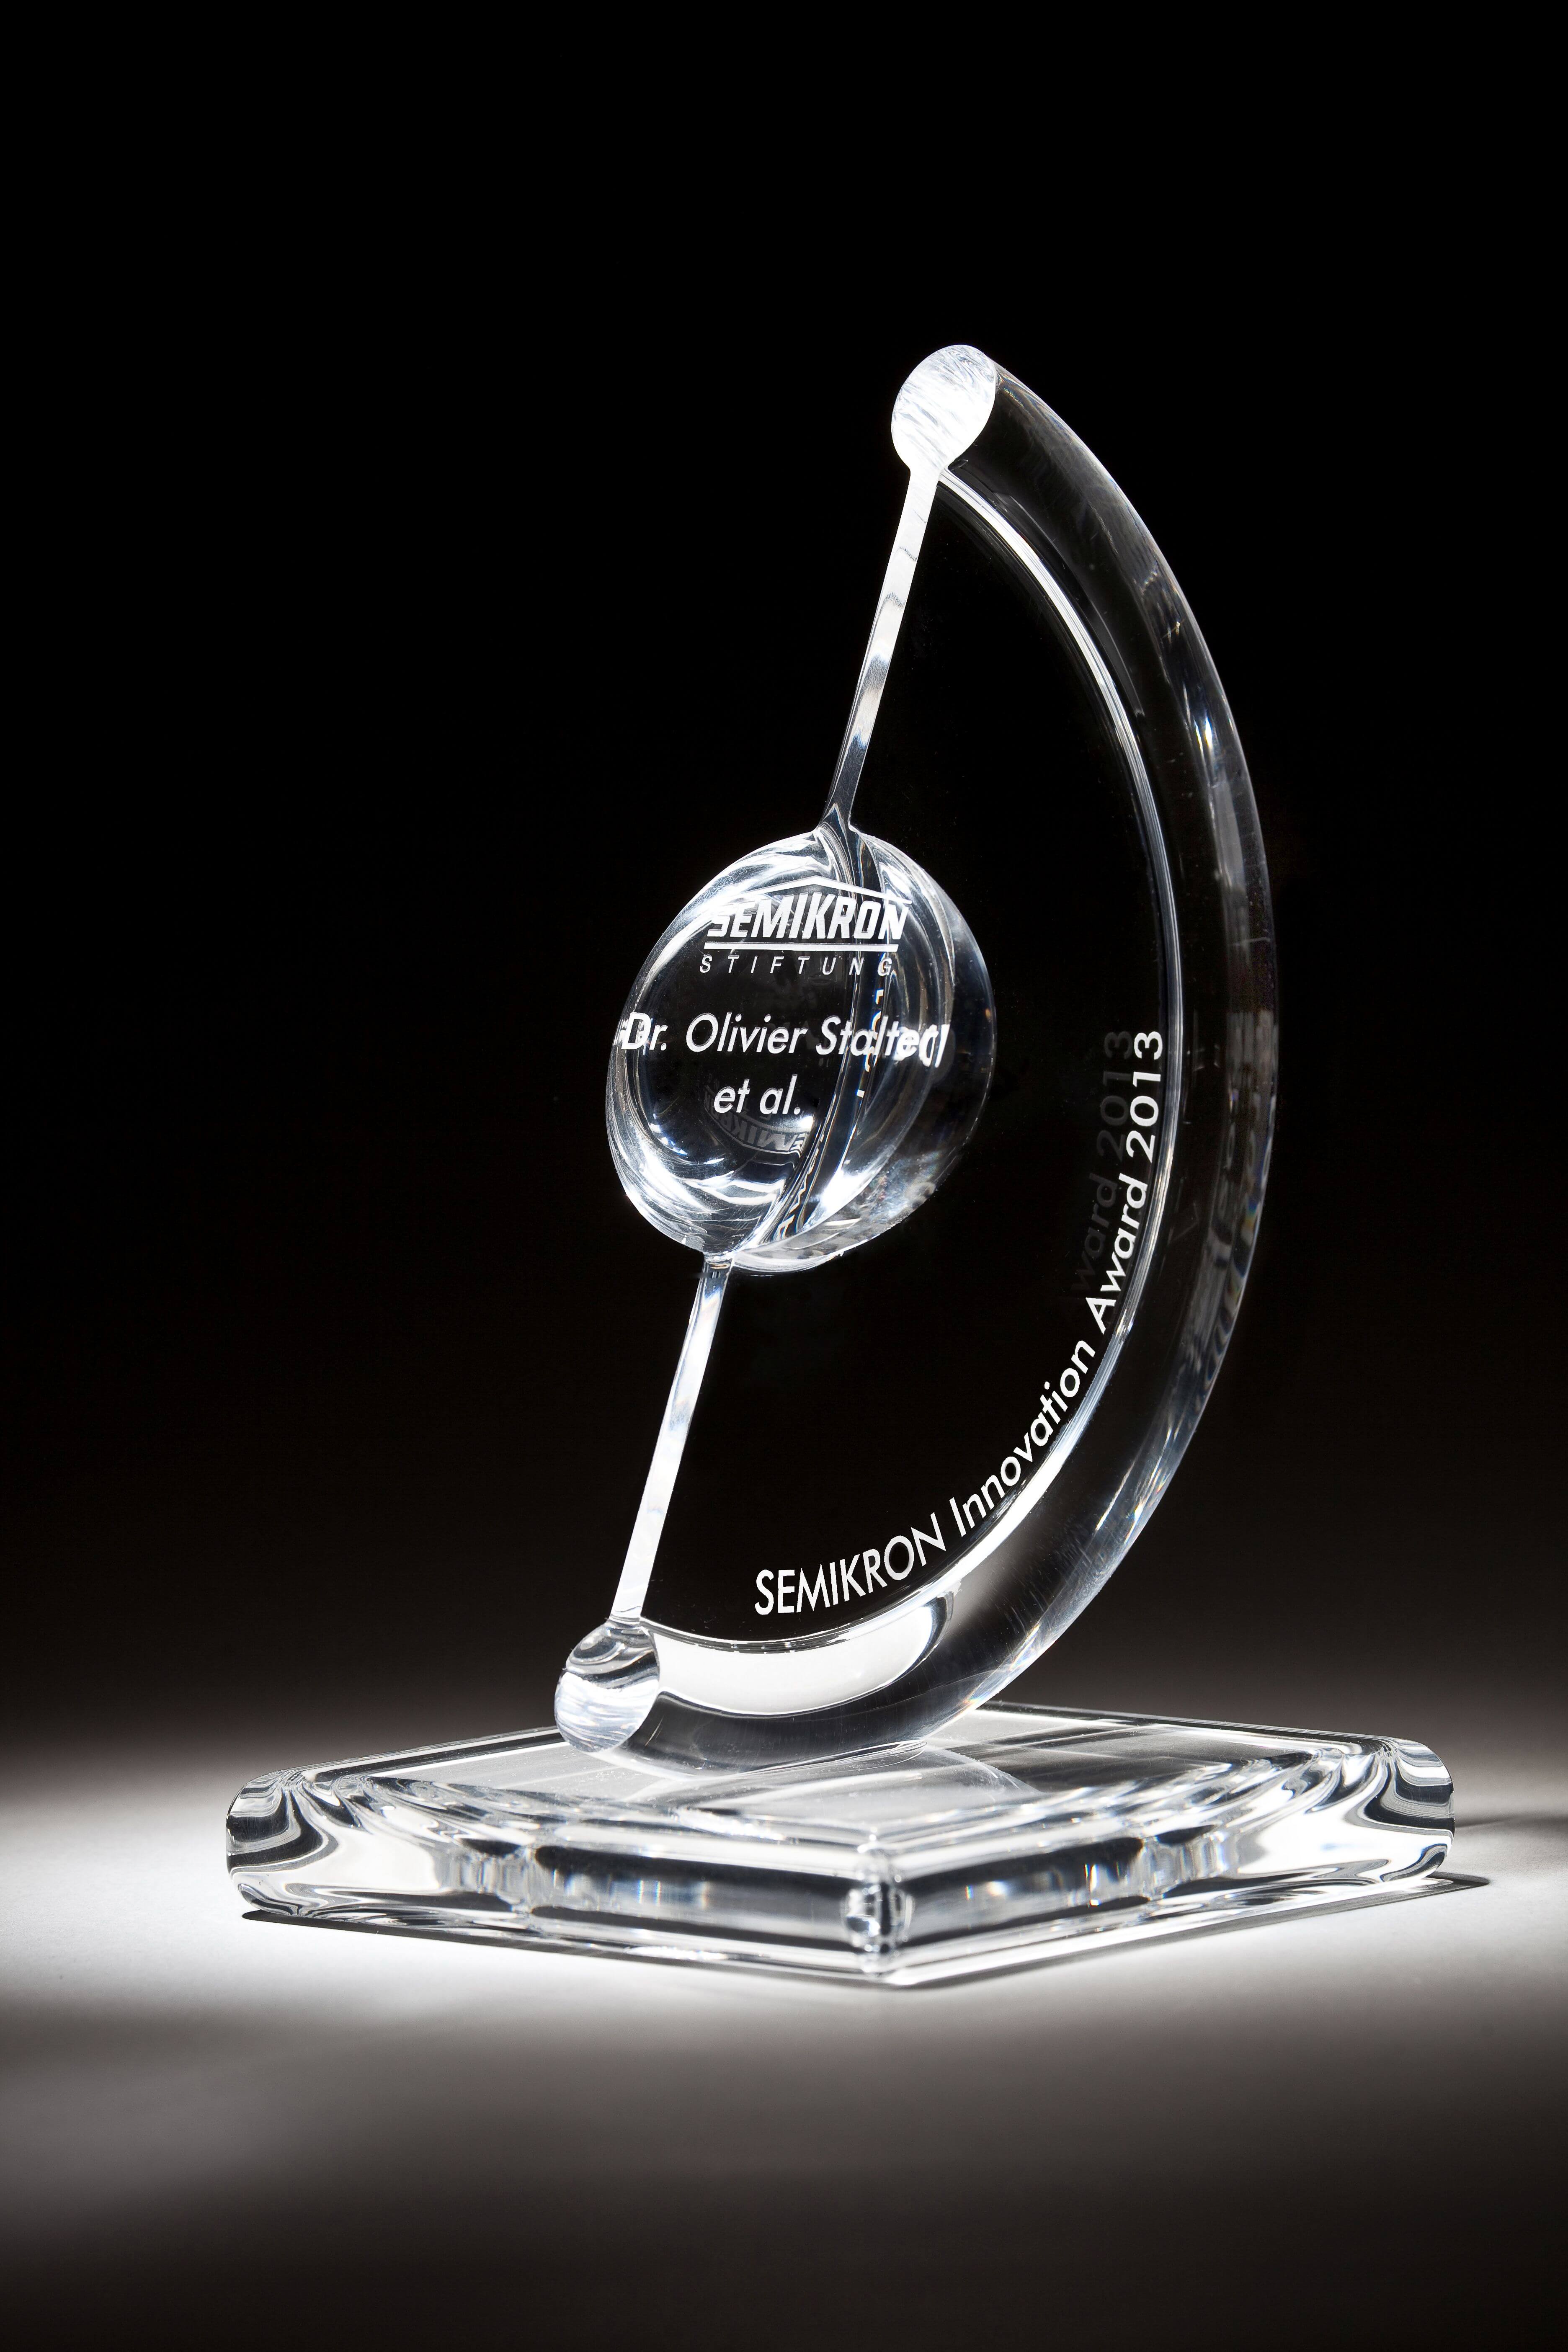 The SEMIKRON Innovation Award 2013 